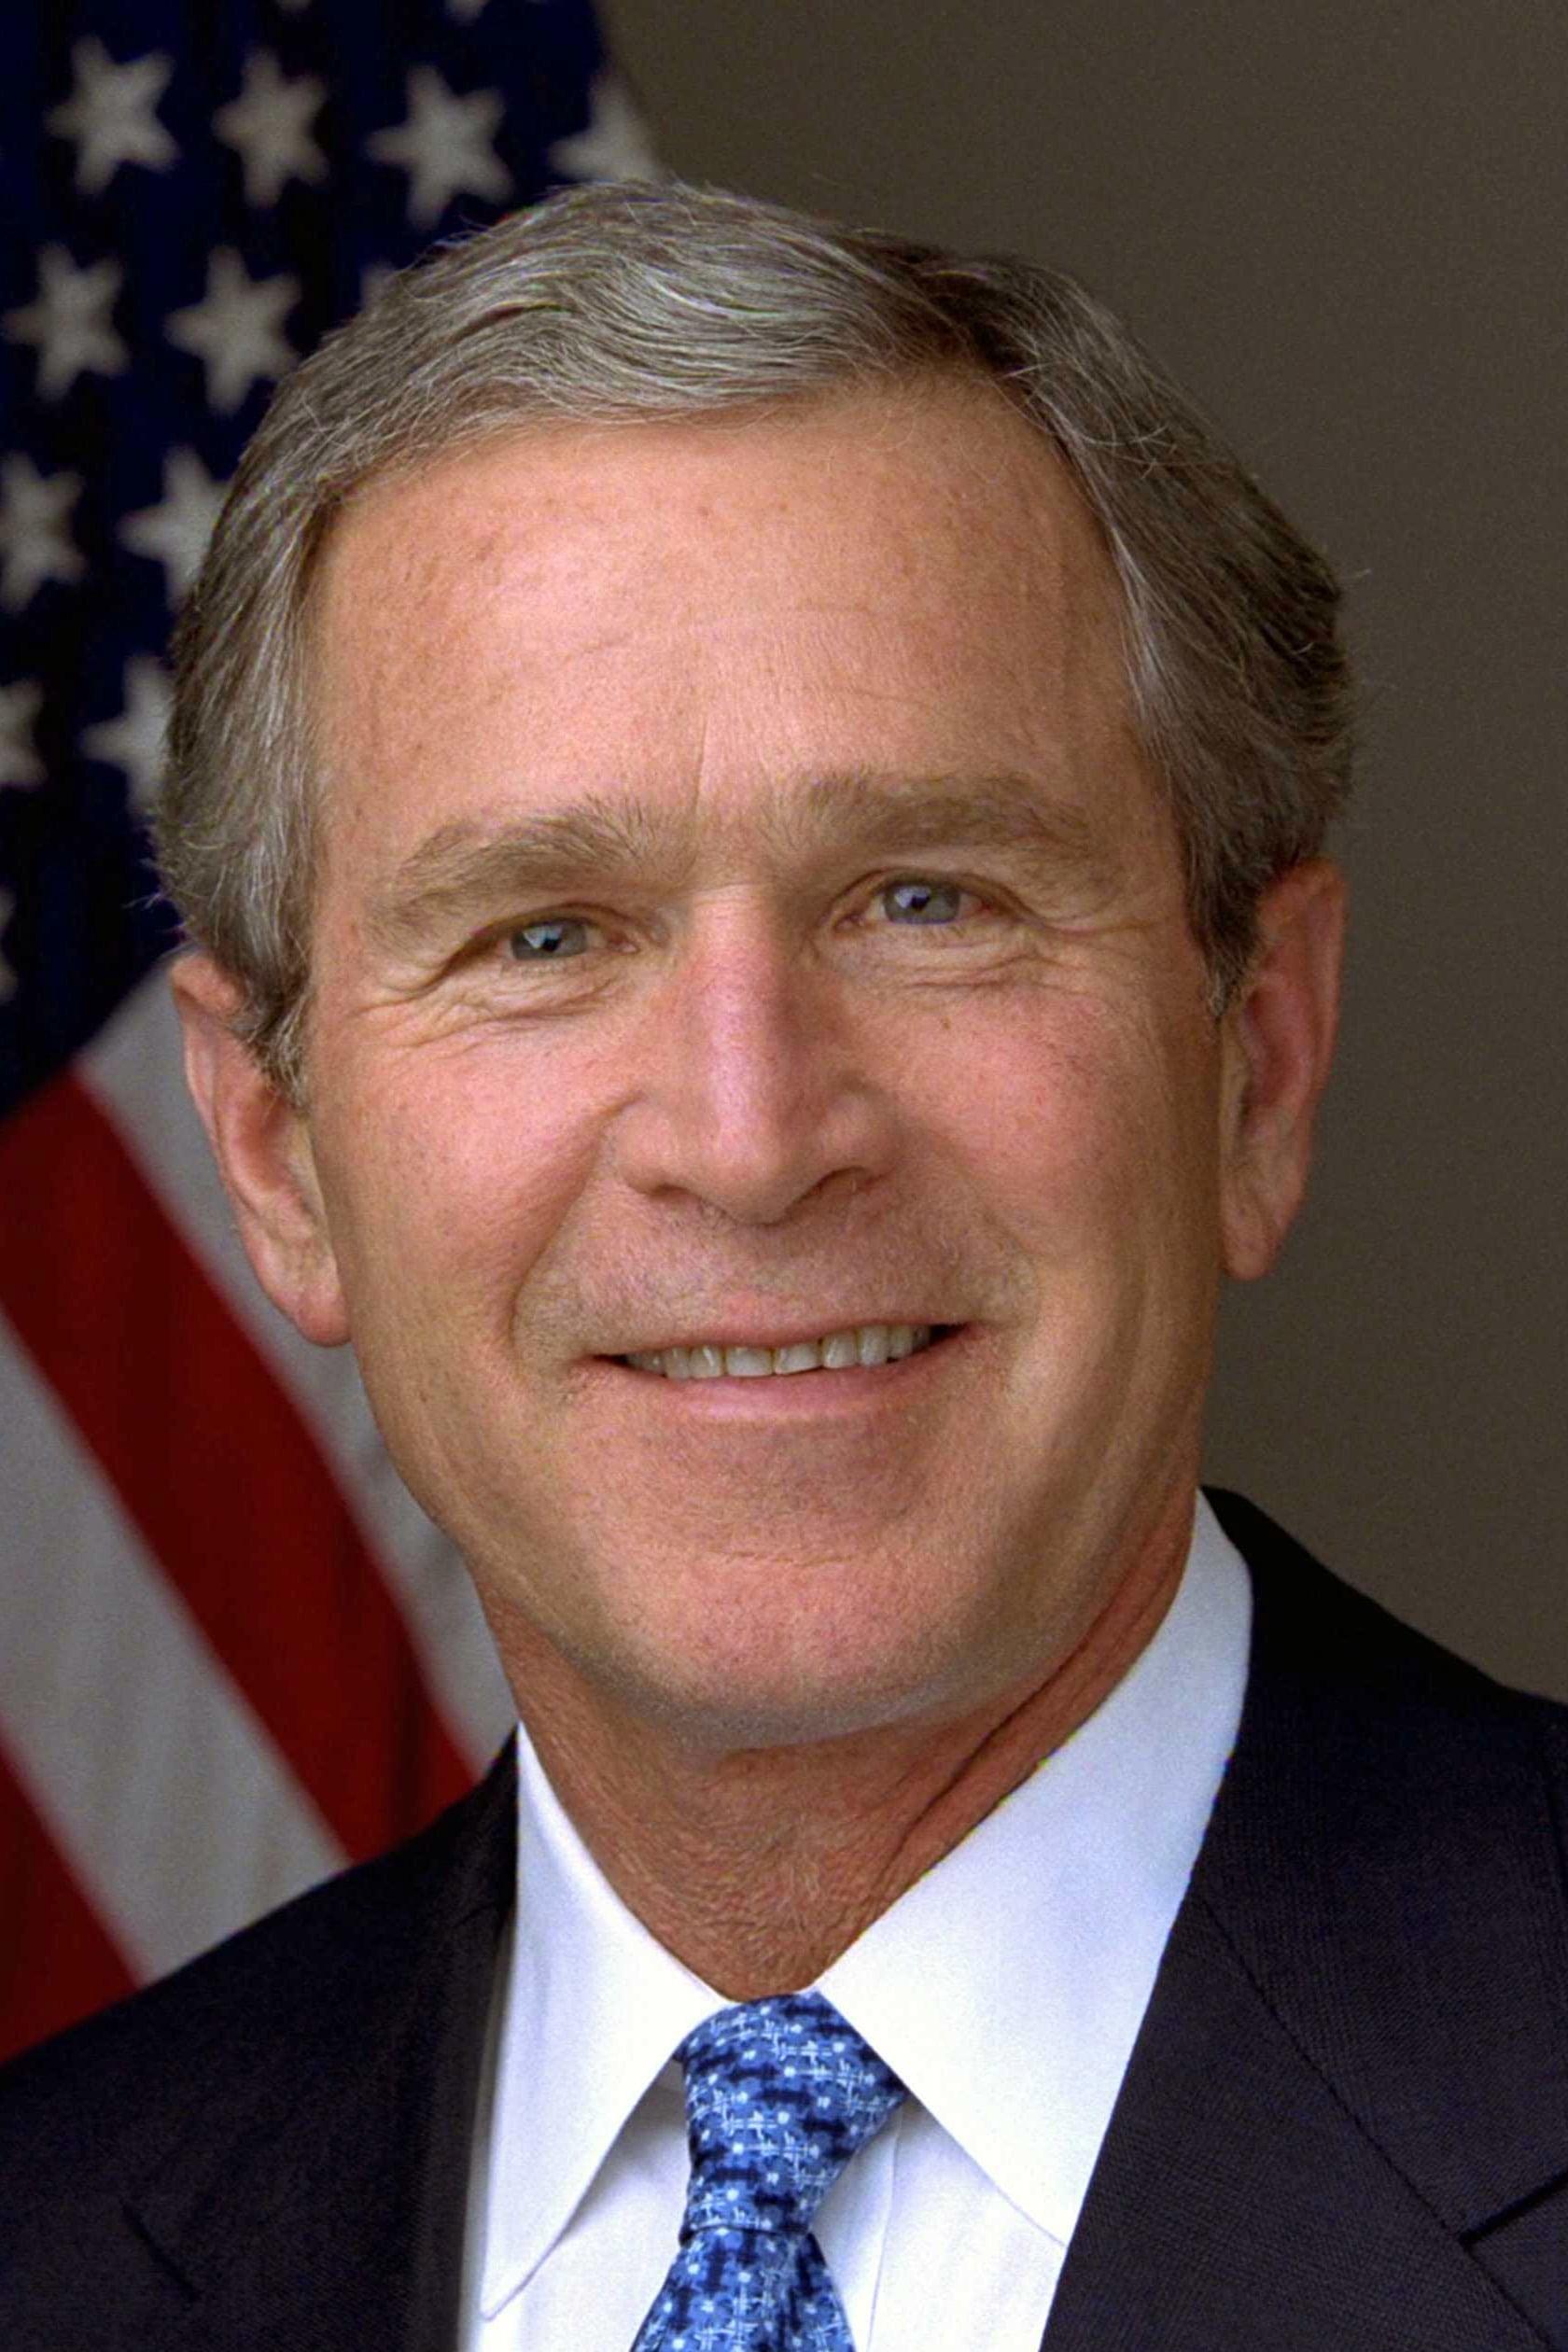 George W. Bush poster